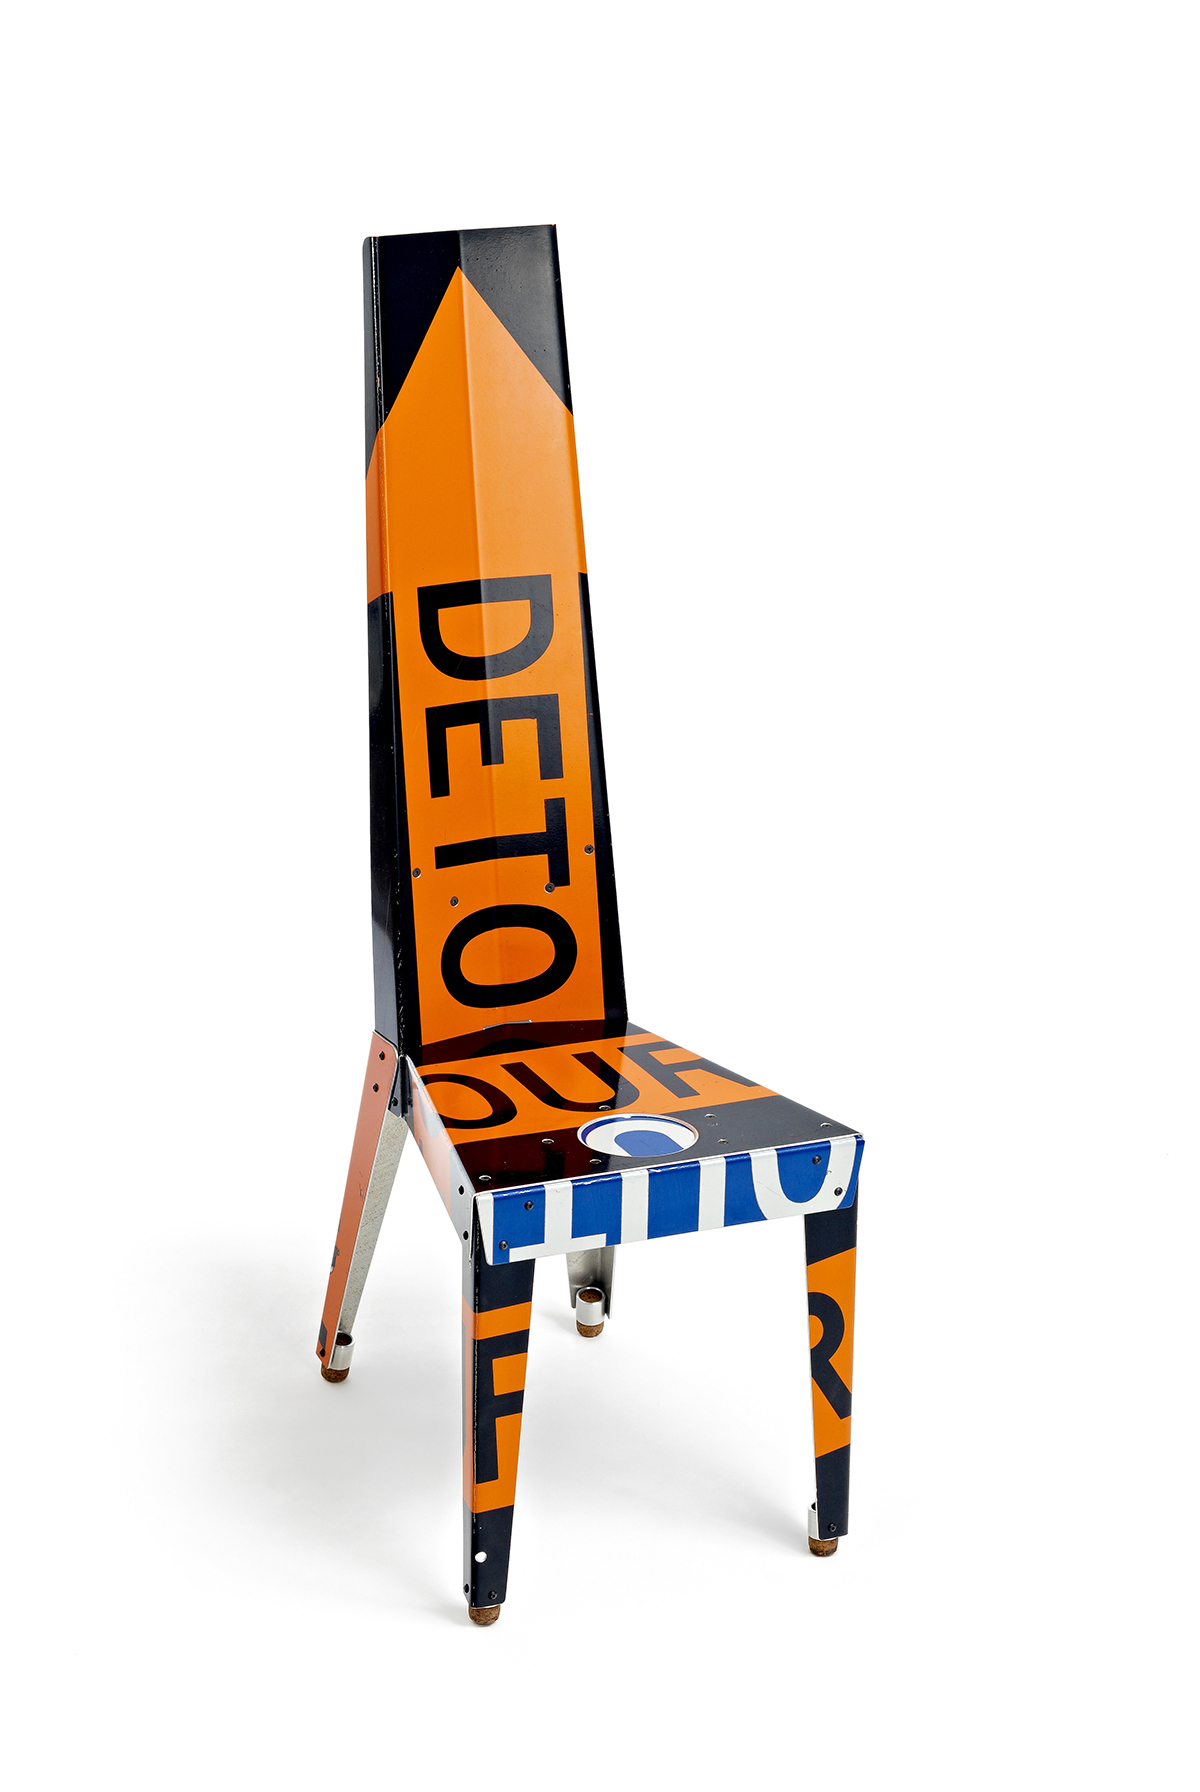 DETOUR Transit Chair